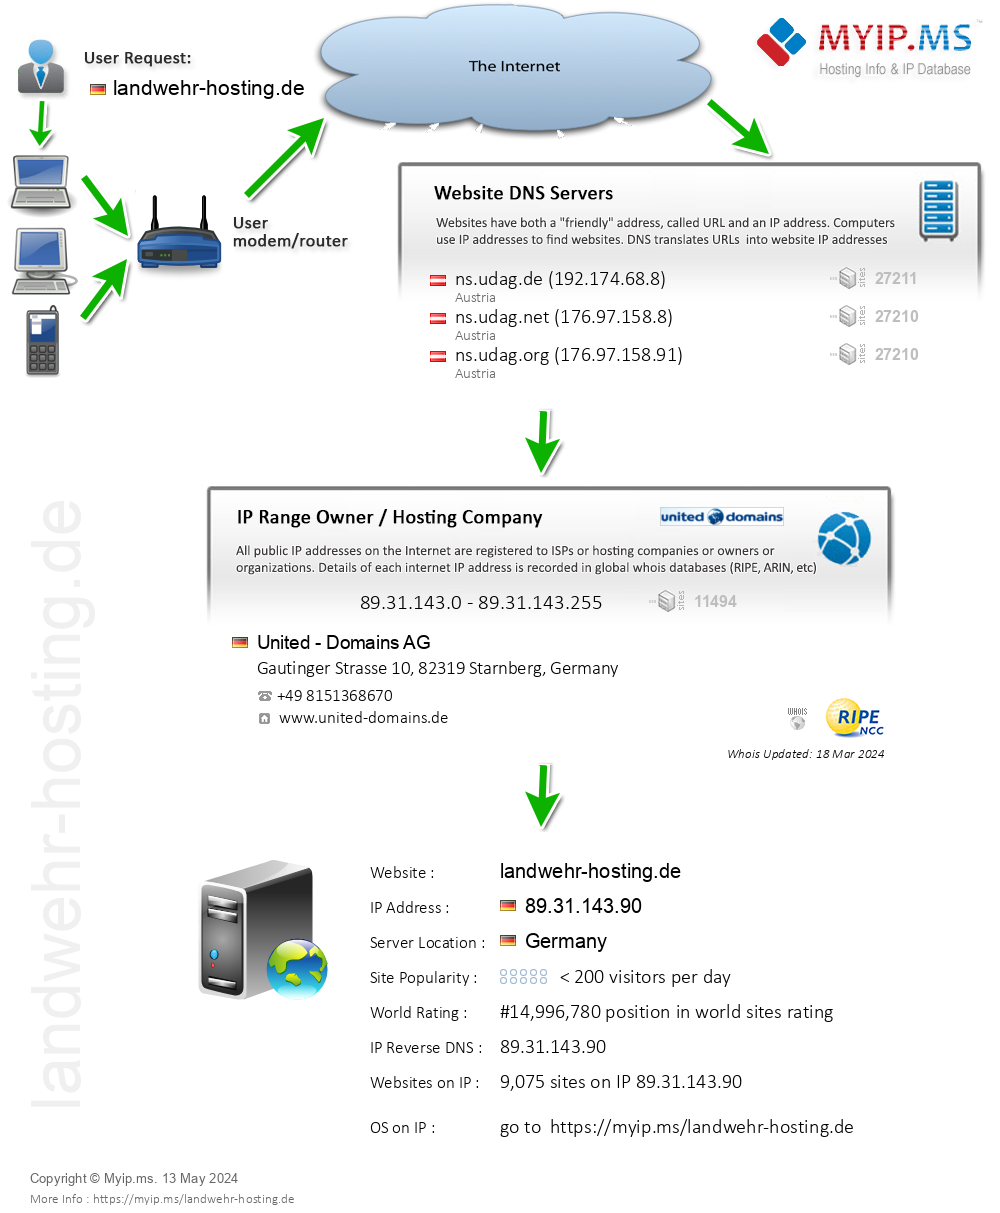 Landwehr-hosting.de - Website Hosting Visual IP Diagram